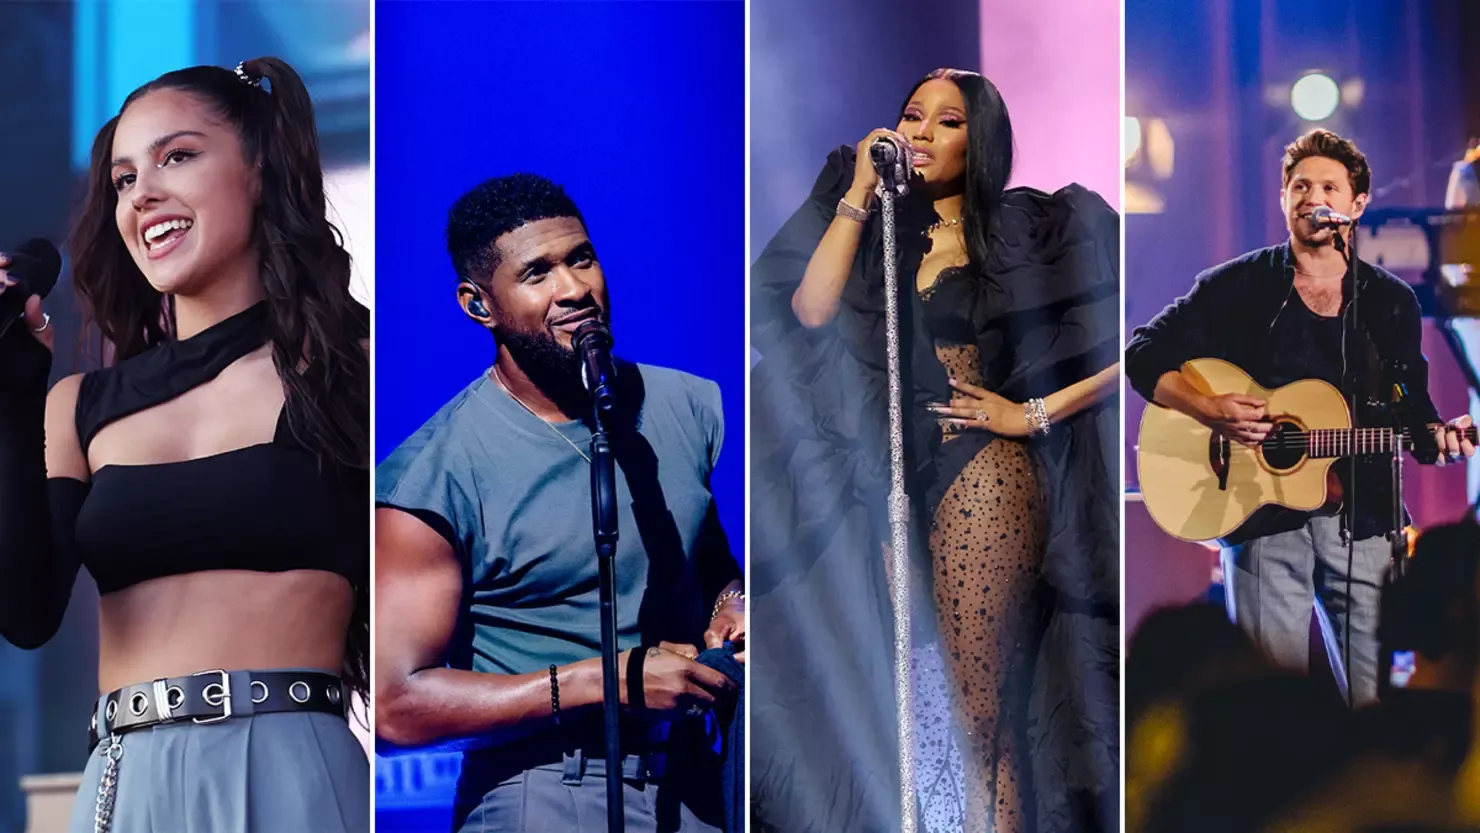 iHeartRadio's "Jingle Ball" Announces Nicki Minaj, Olivia Rodrigo, and SZA as Part of Lineup